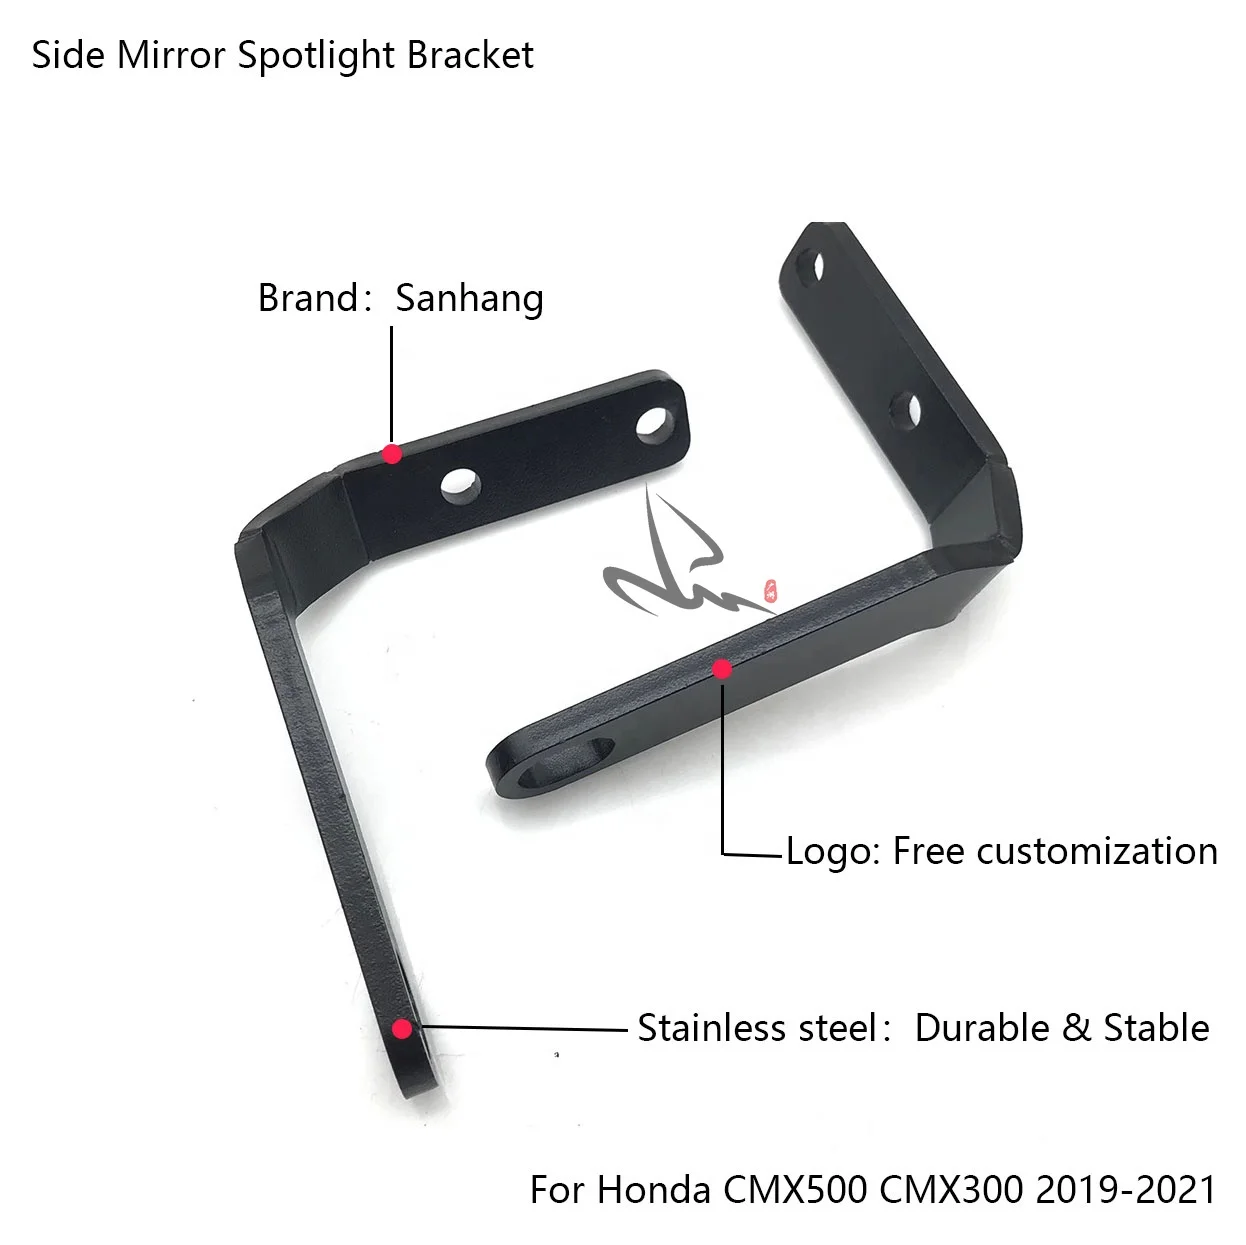 Sanhang For Handlebar Rear View Side Mirror Spotlight Bracket For Honda Rebel CMX300 CMX500 2019 2020 2021 CMX 300 500 parts